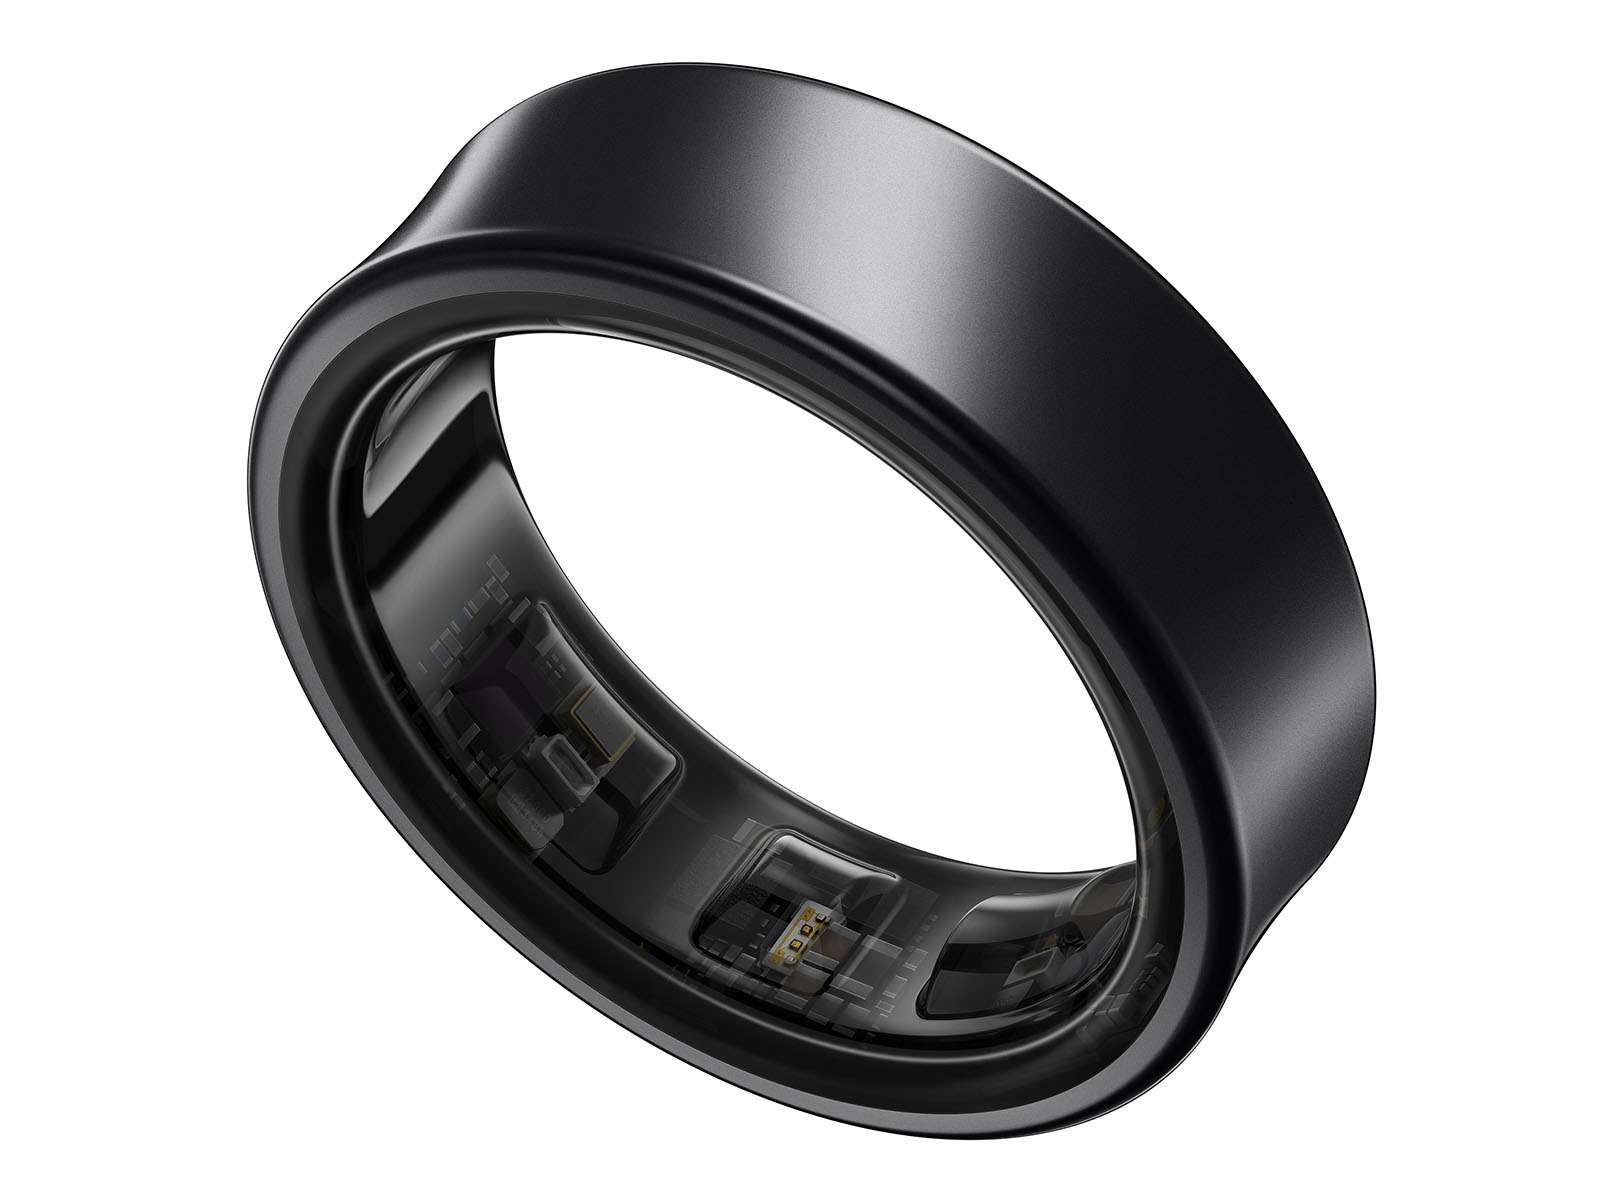 Thumbnail image of Galaxy Ring, Size 6, Titanium Black